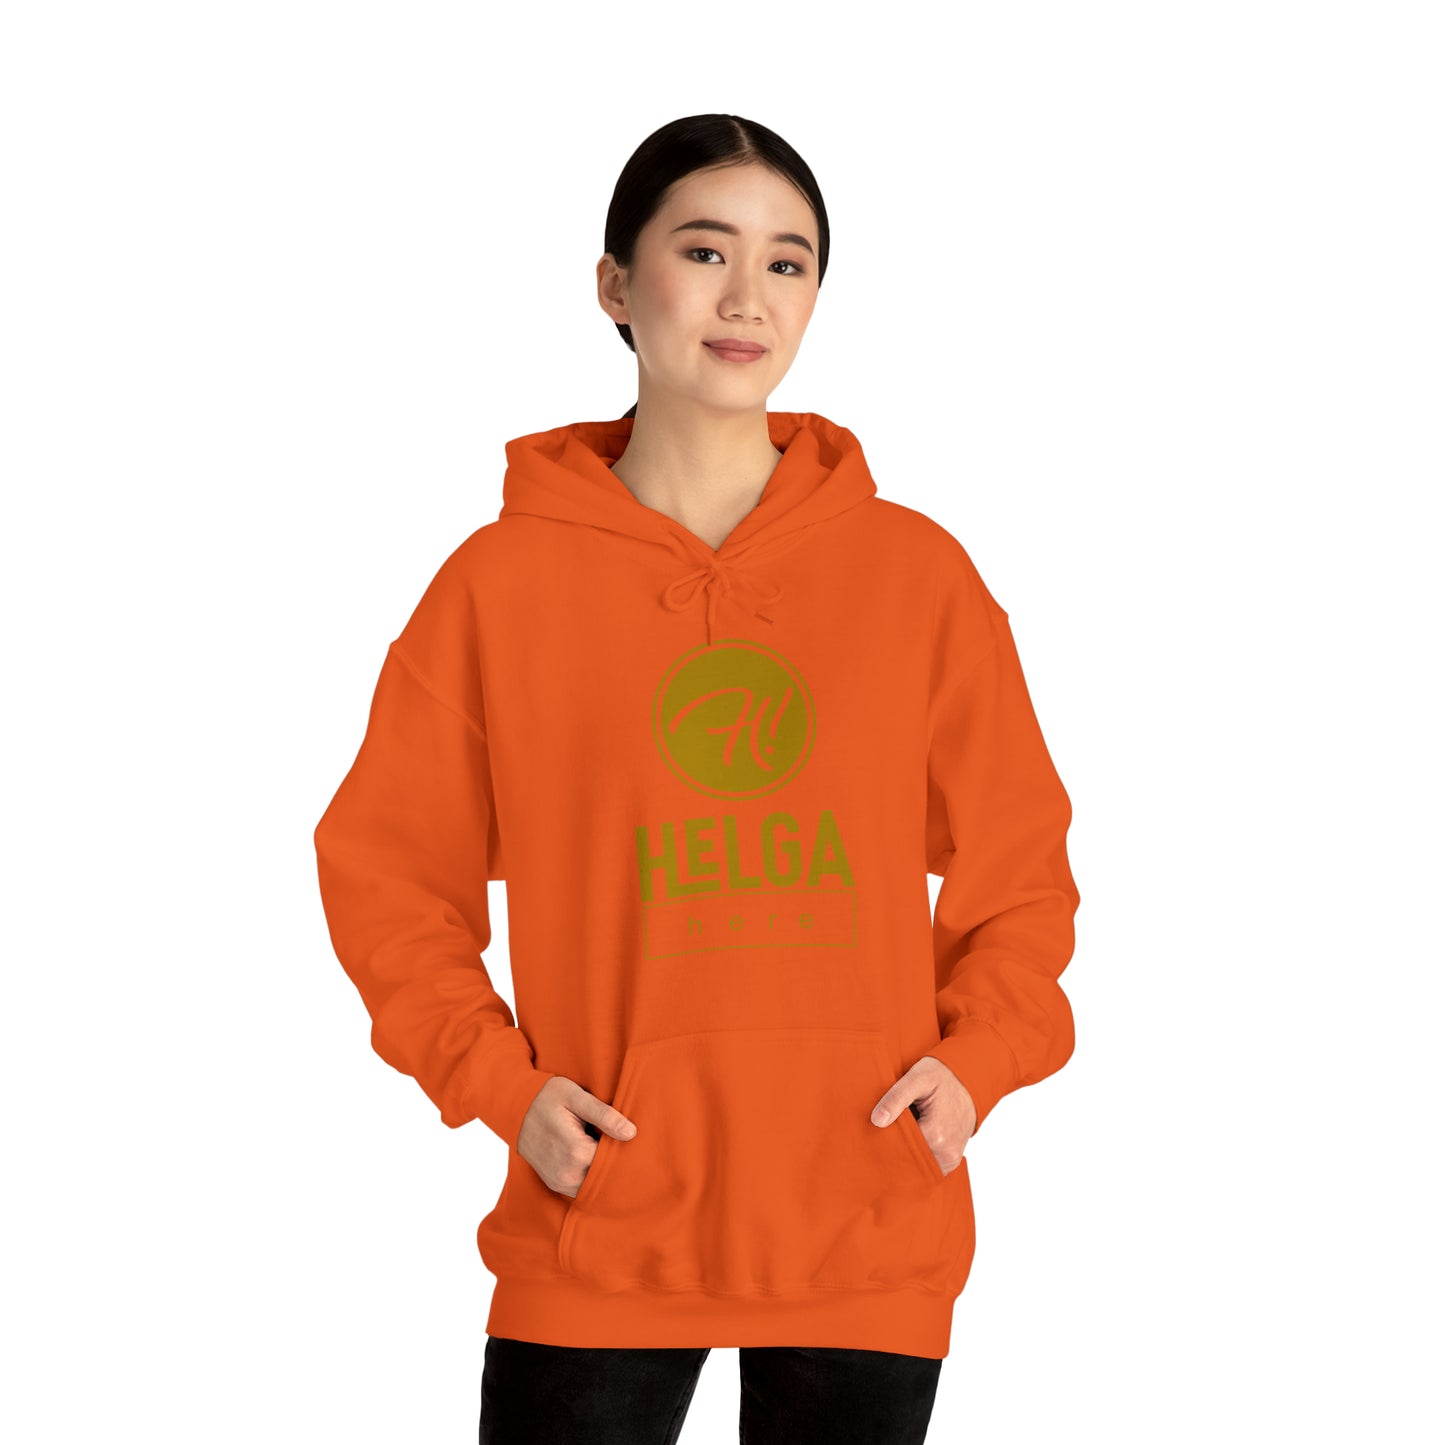 Helga's Unisex Heavy Blend™ Hooded Sweatshirt - 3 color options!